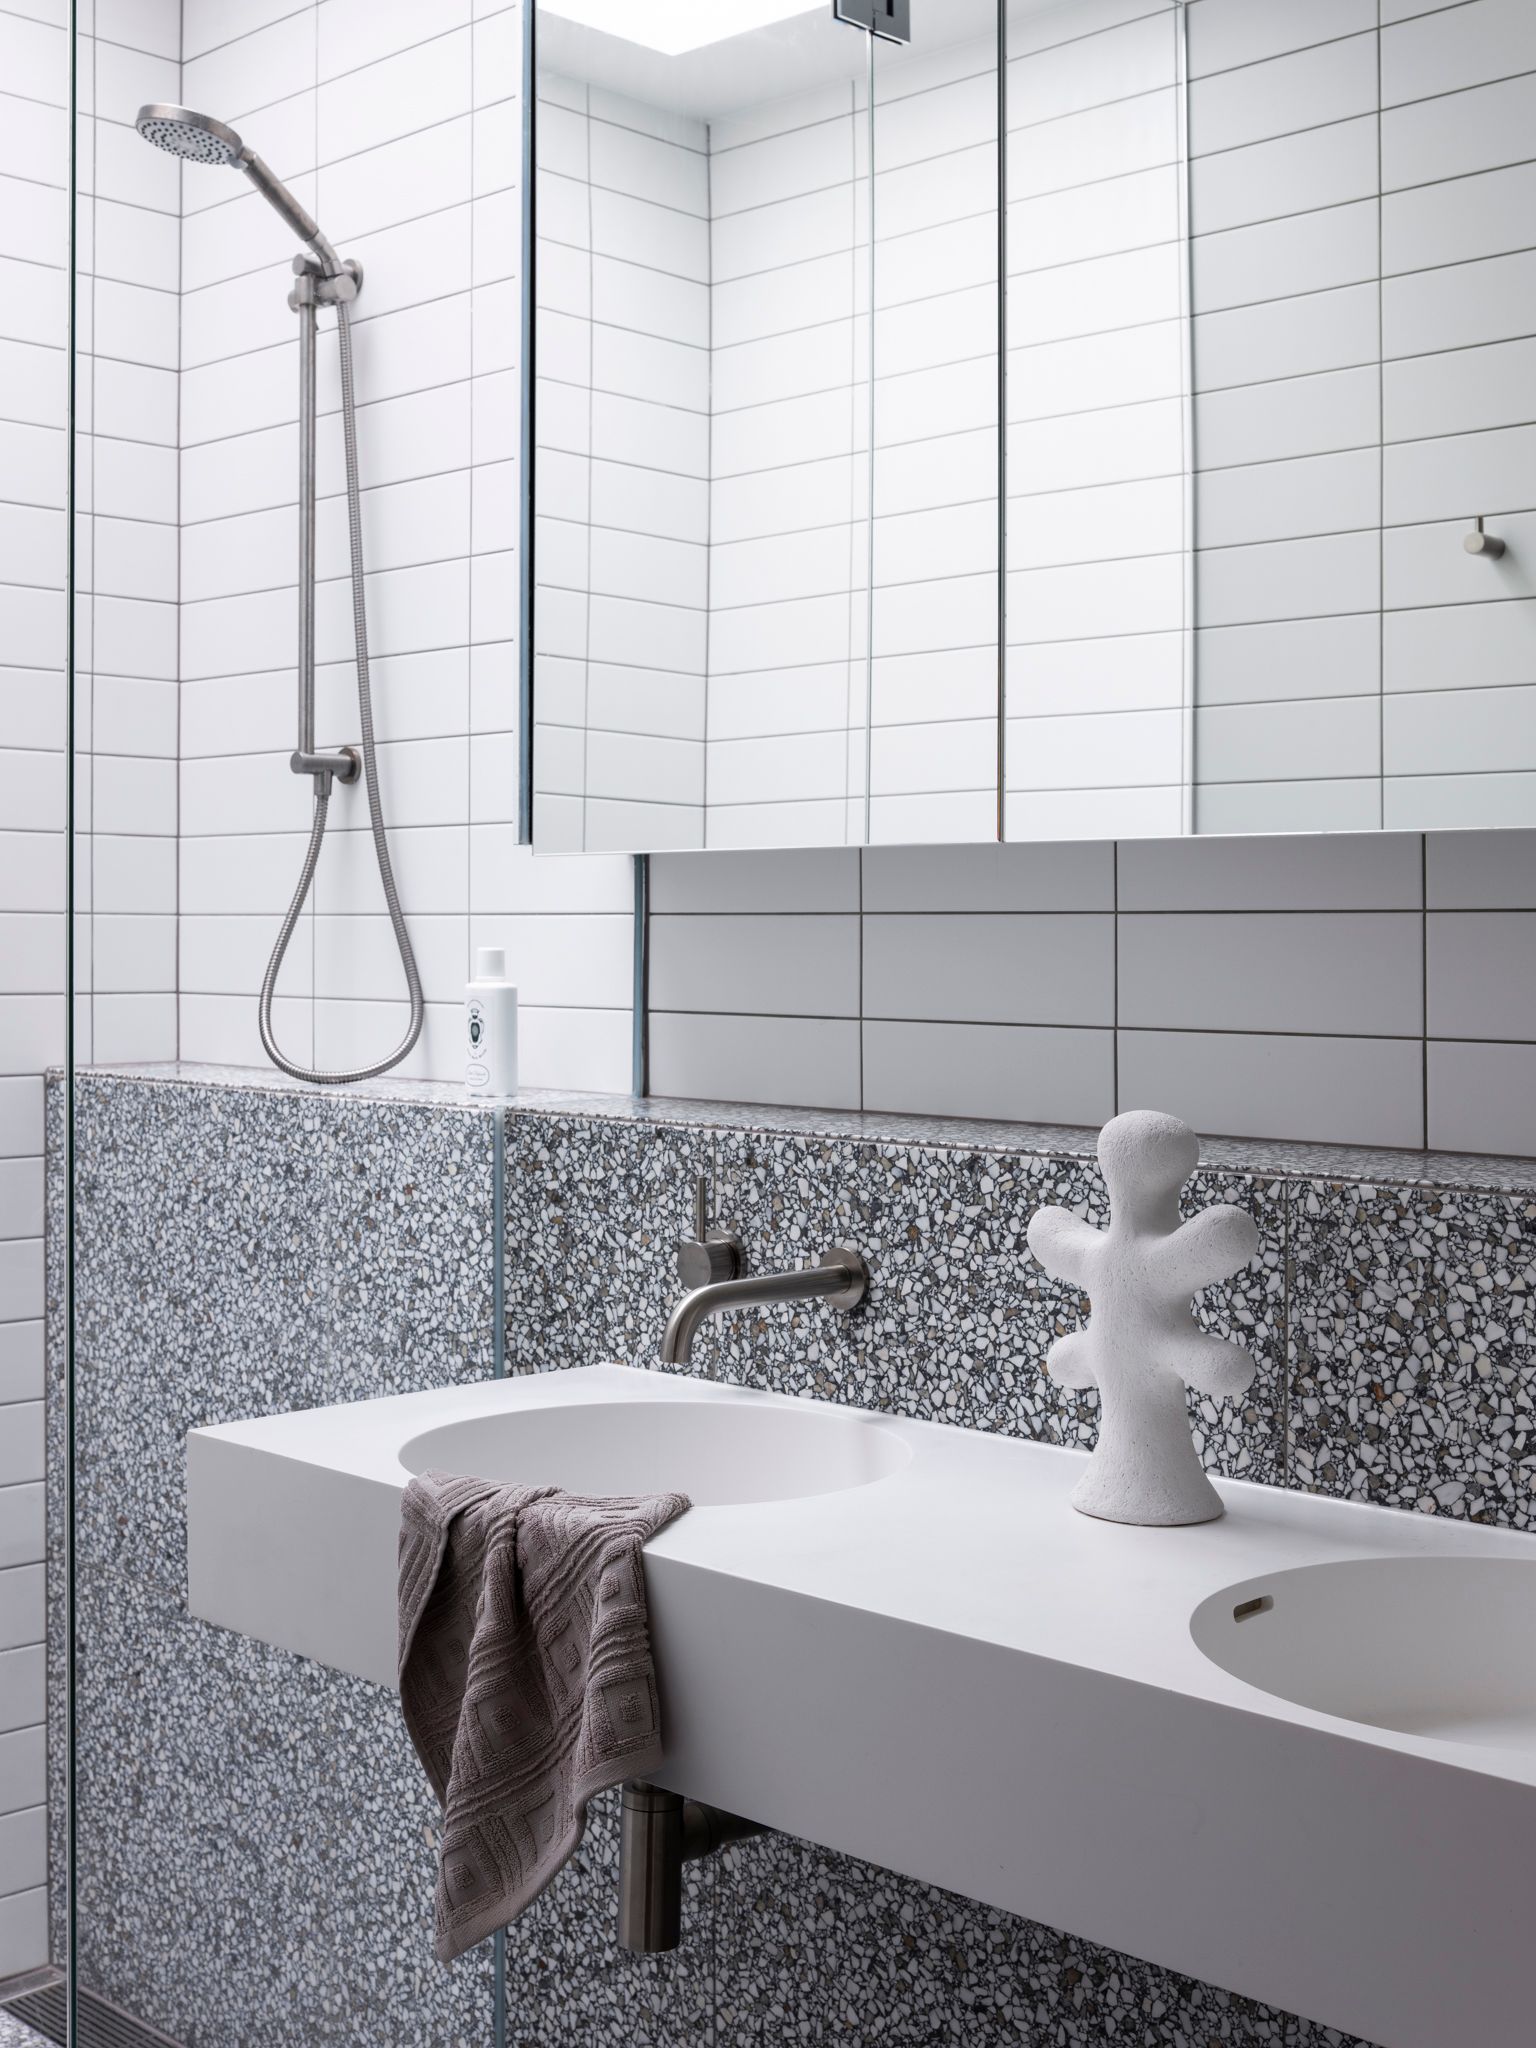 Bondi Beach House by Carla Middleton Architecture. Bathroom vanity and shower